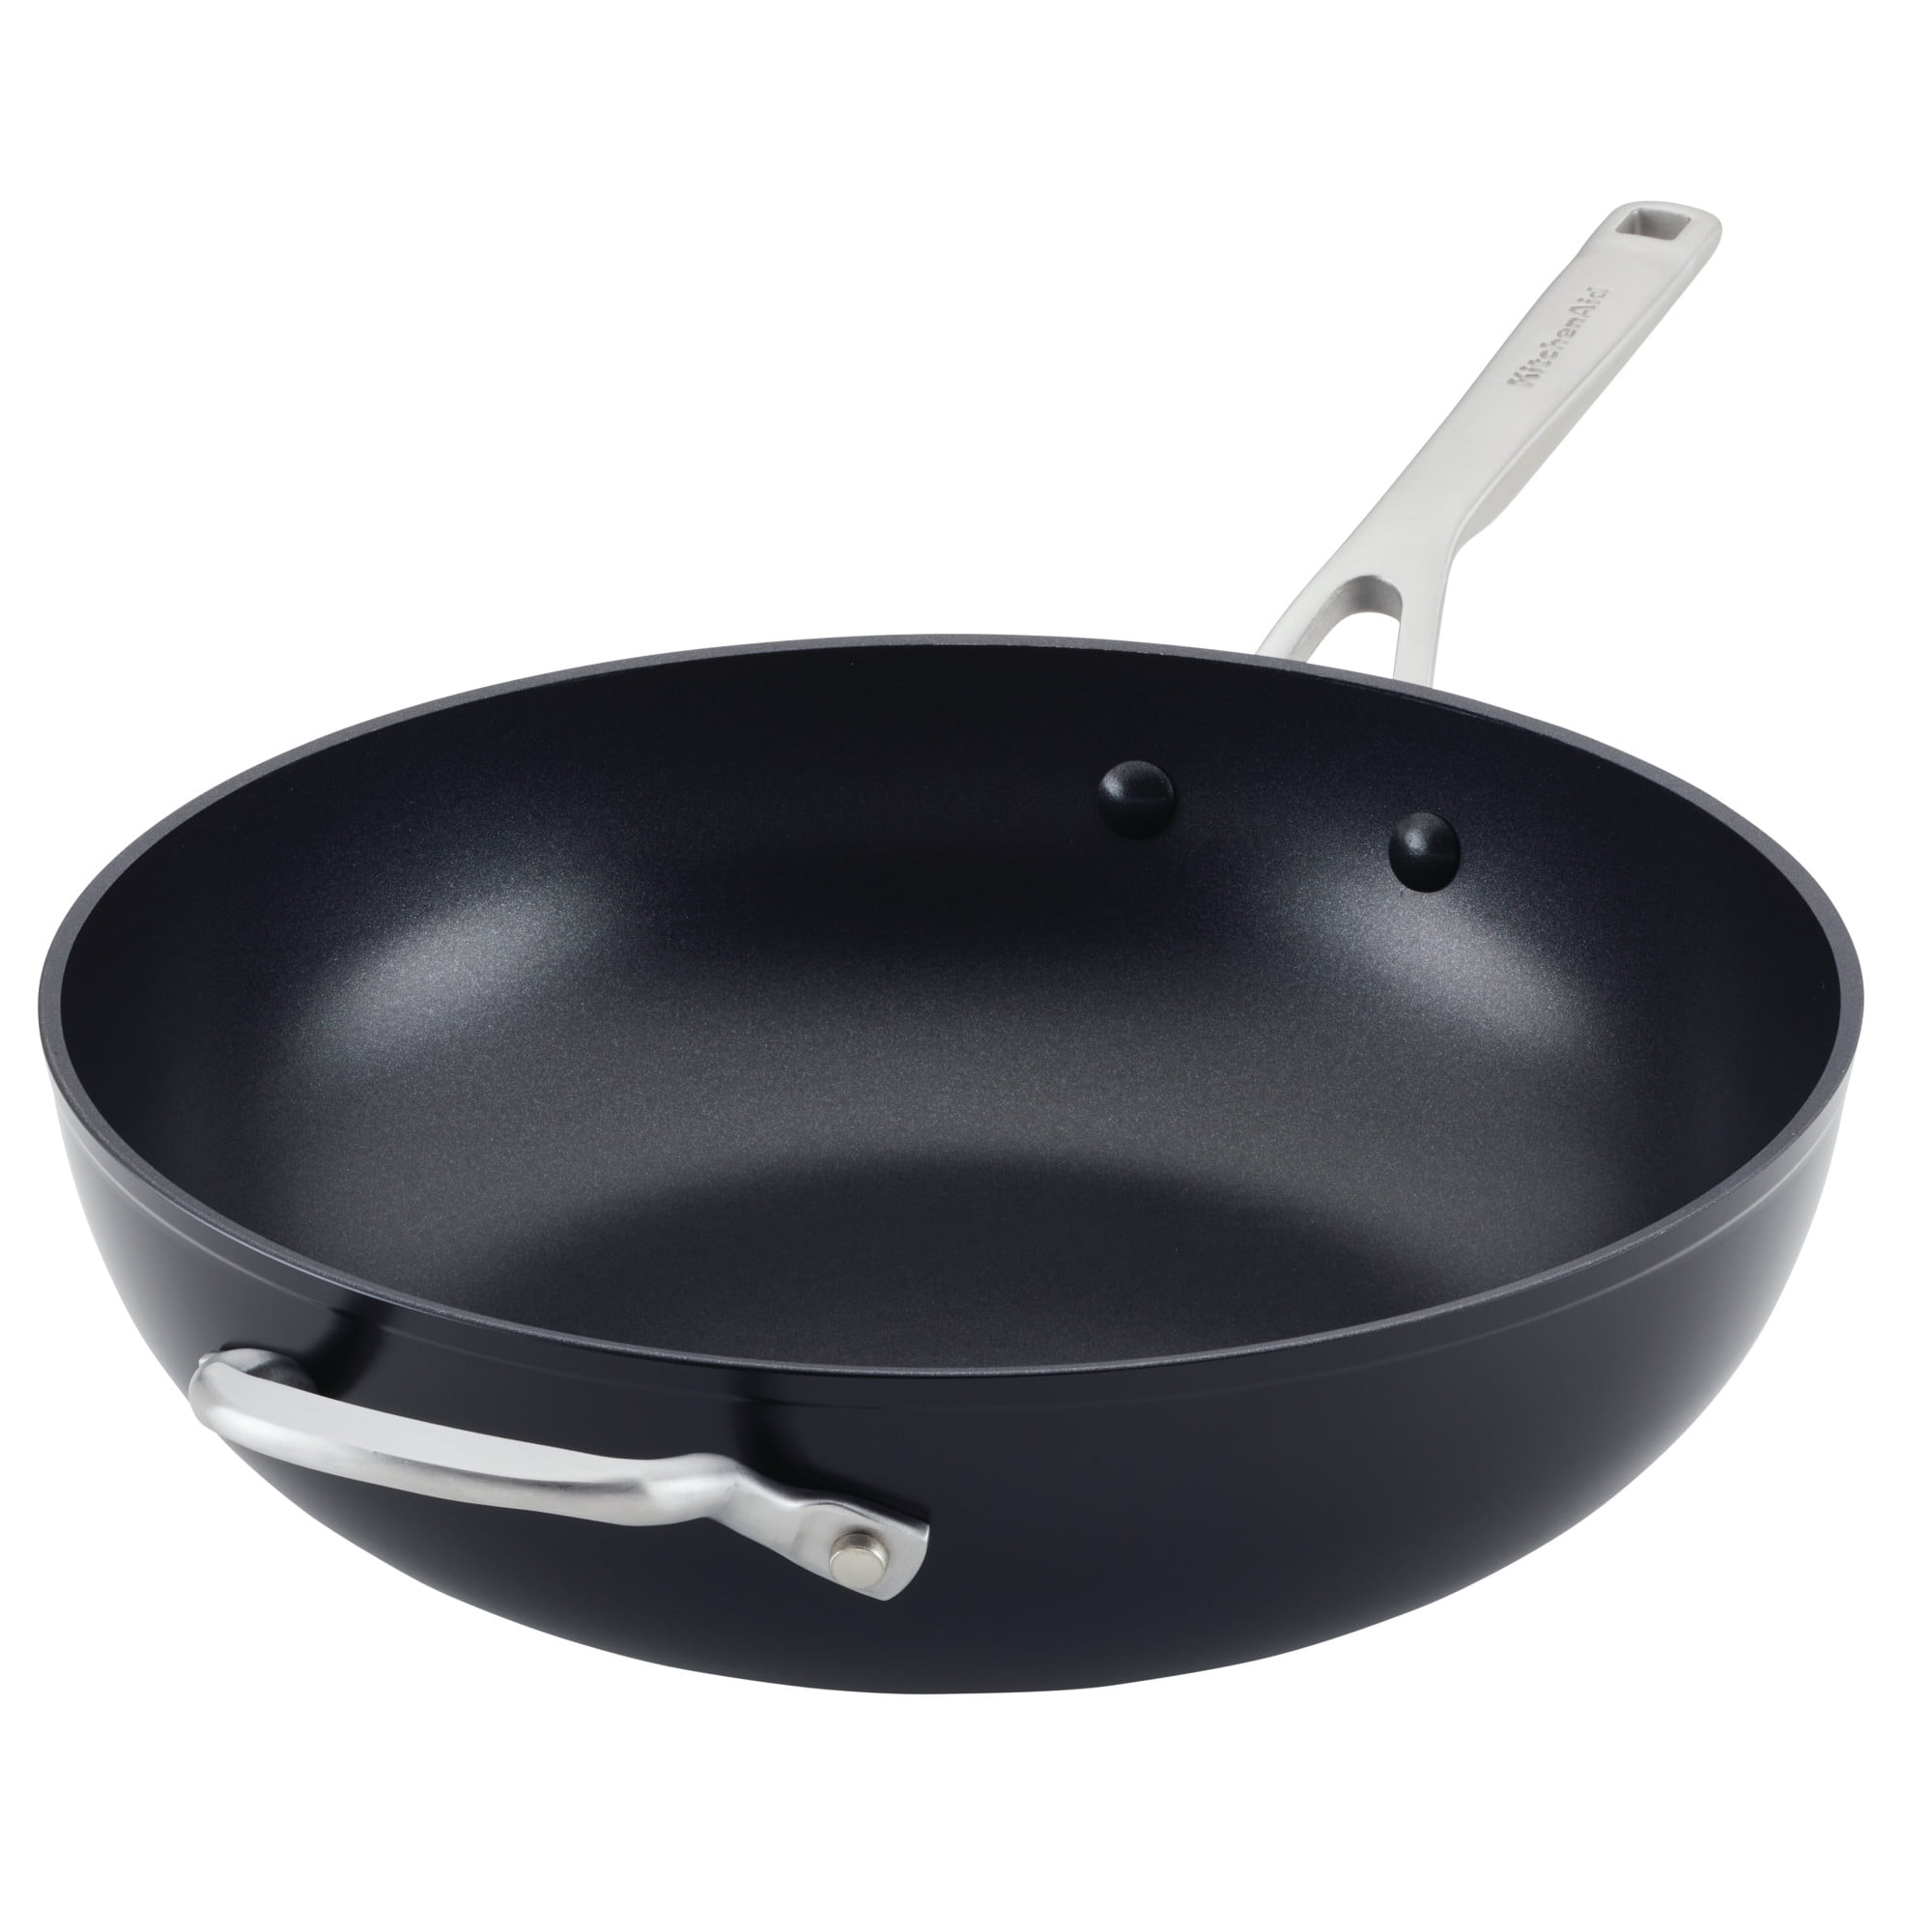 Stainless Steel Wok, Nonstick Deep Frying Pan For Stir- Fry